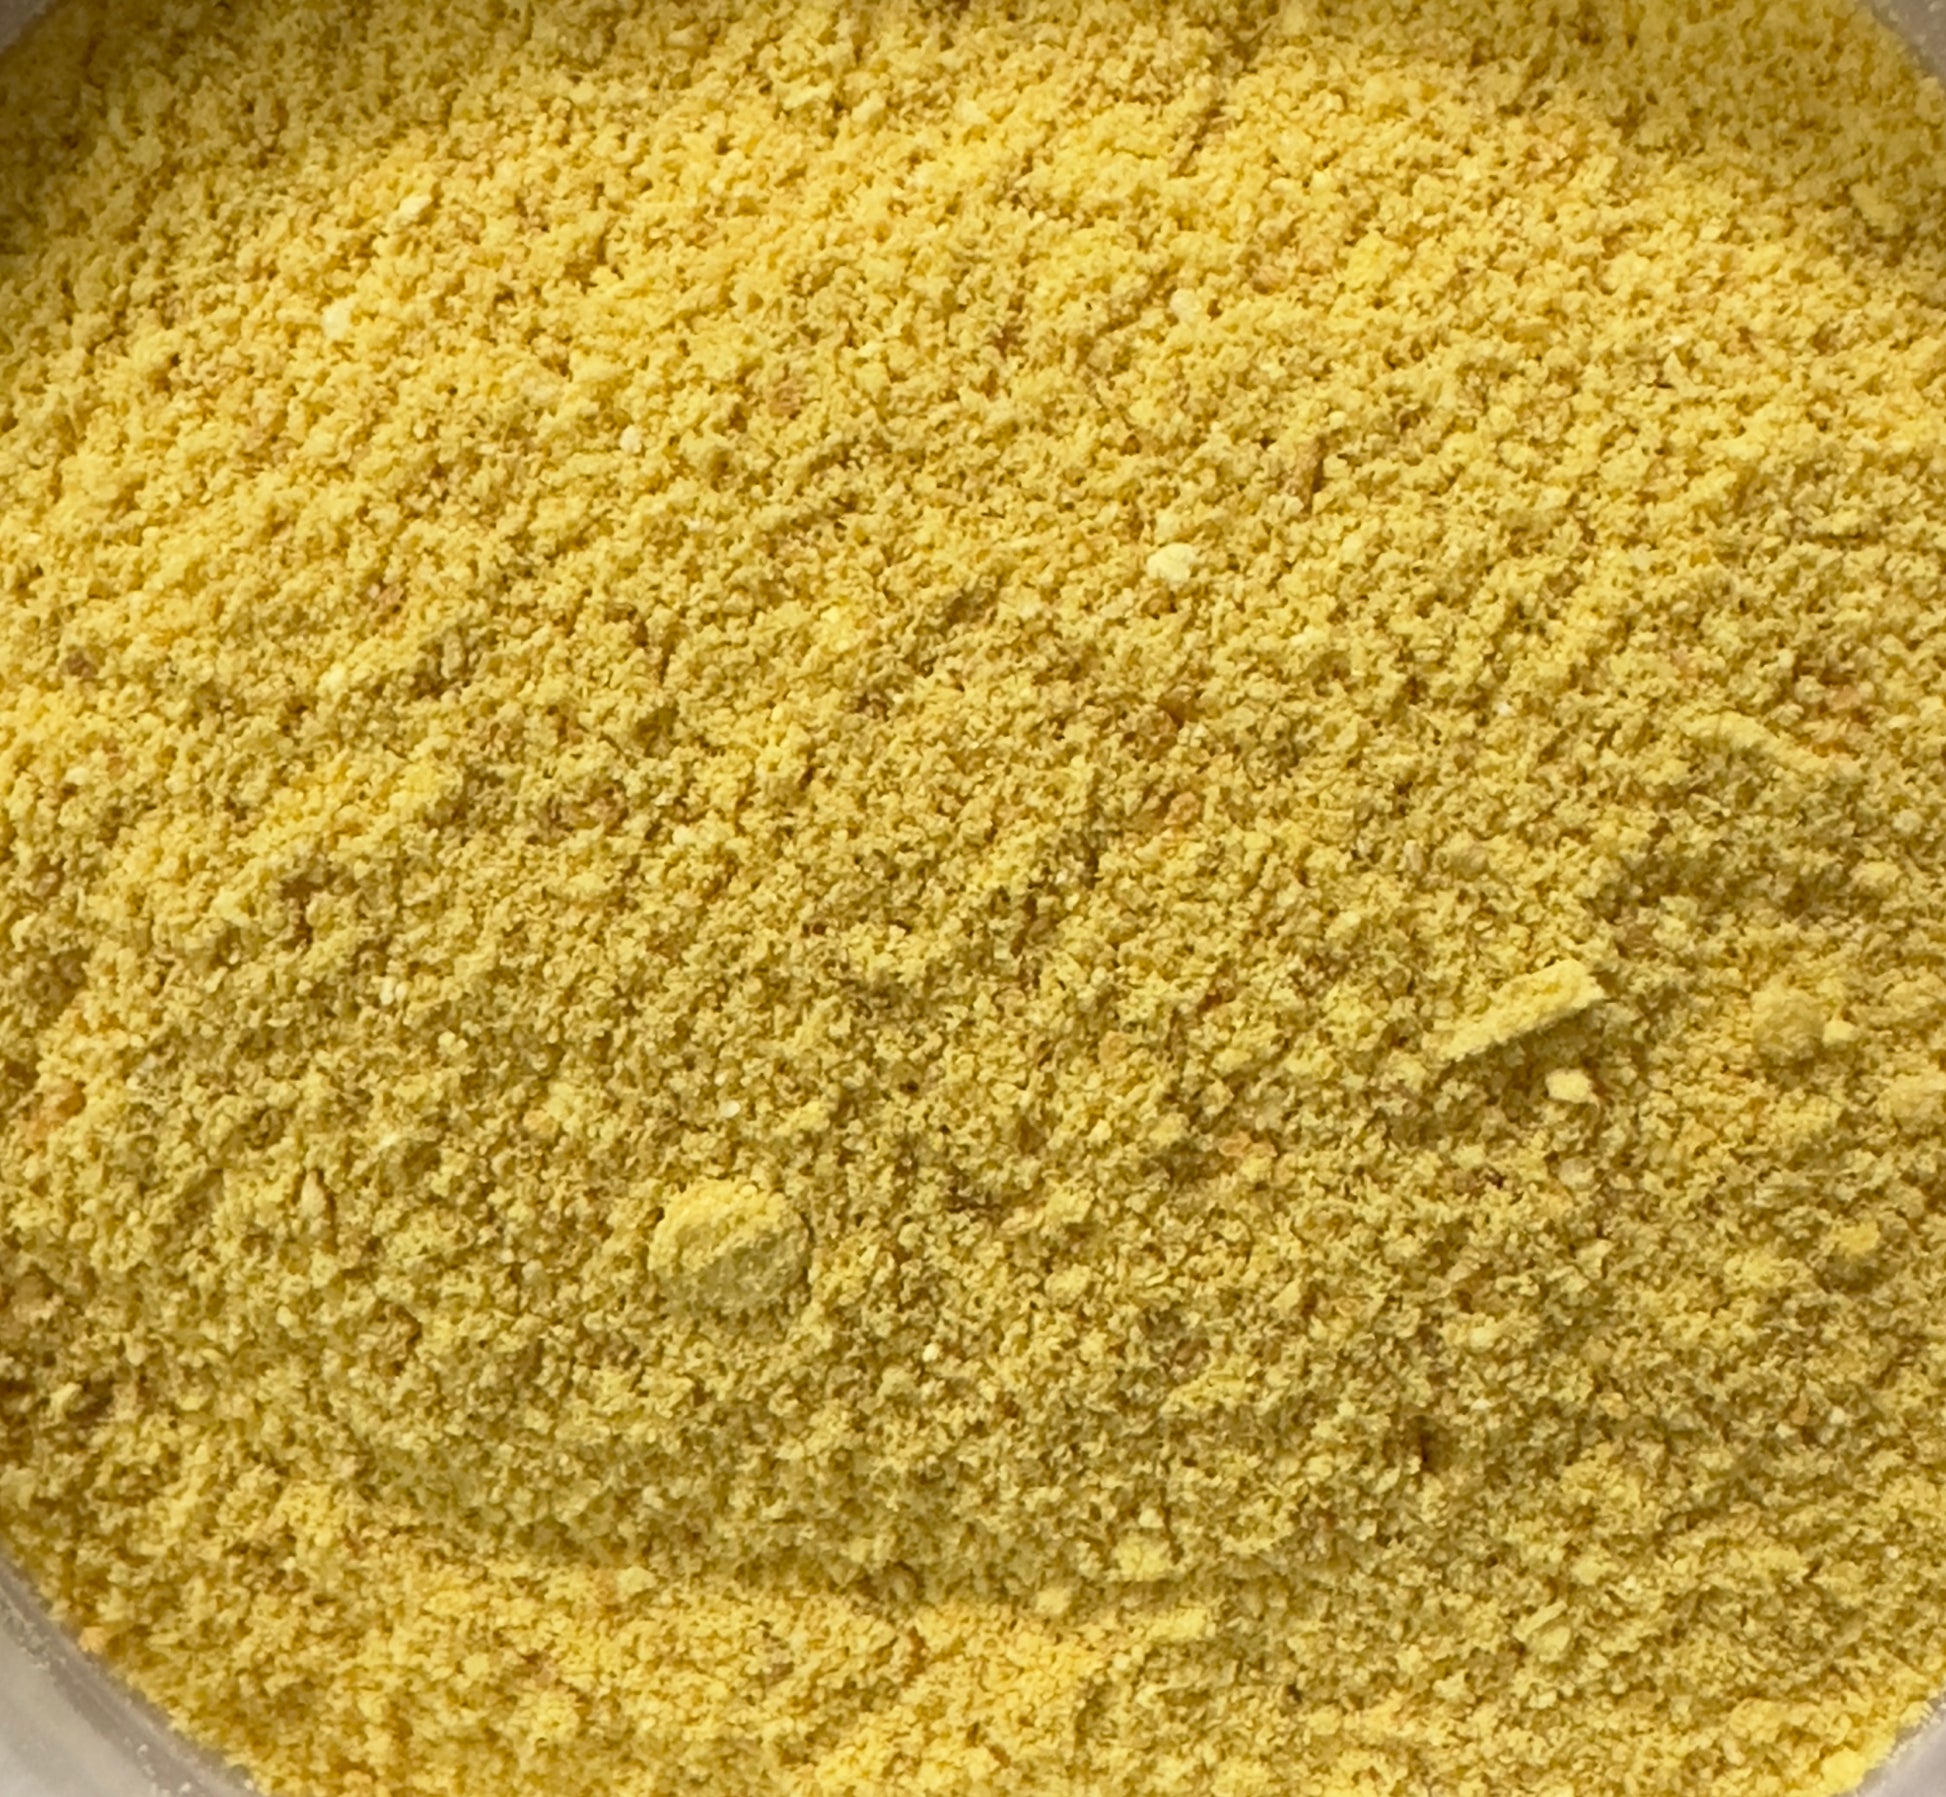 Dry Orange Powder | Shiva Organic